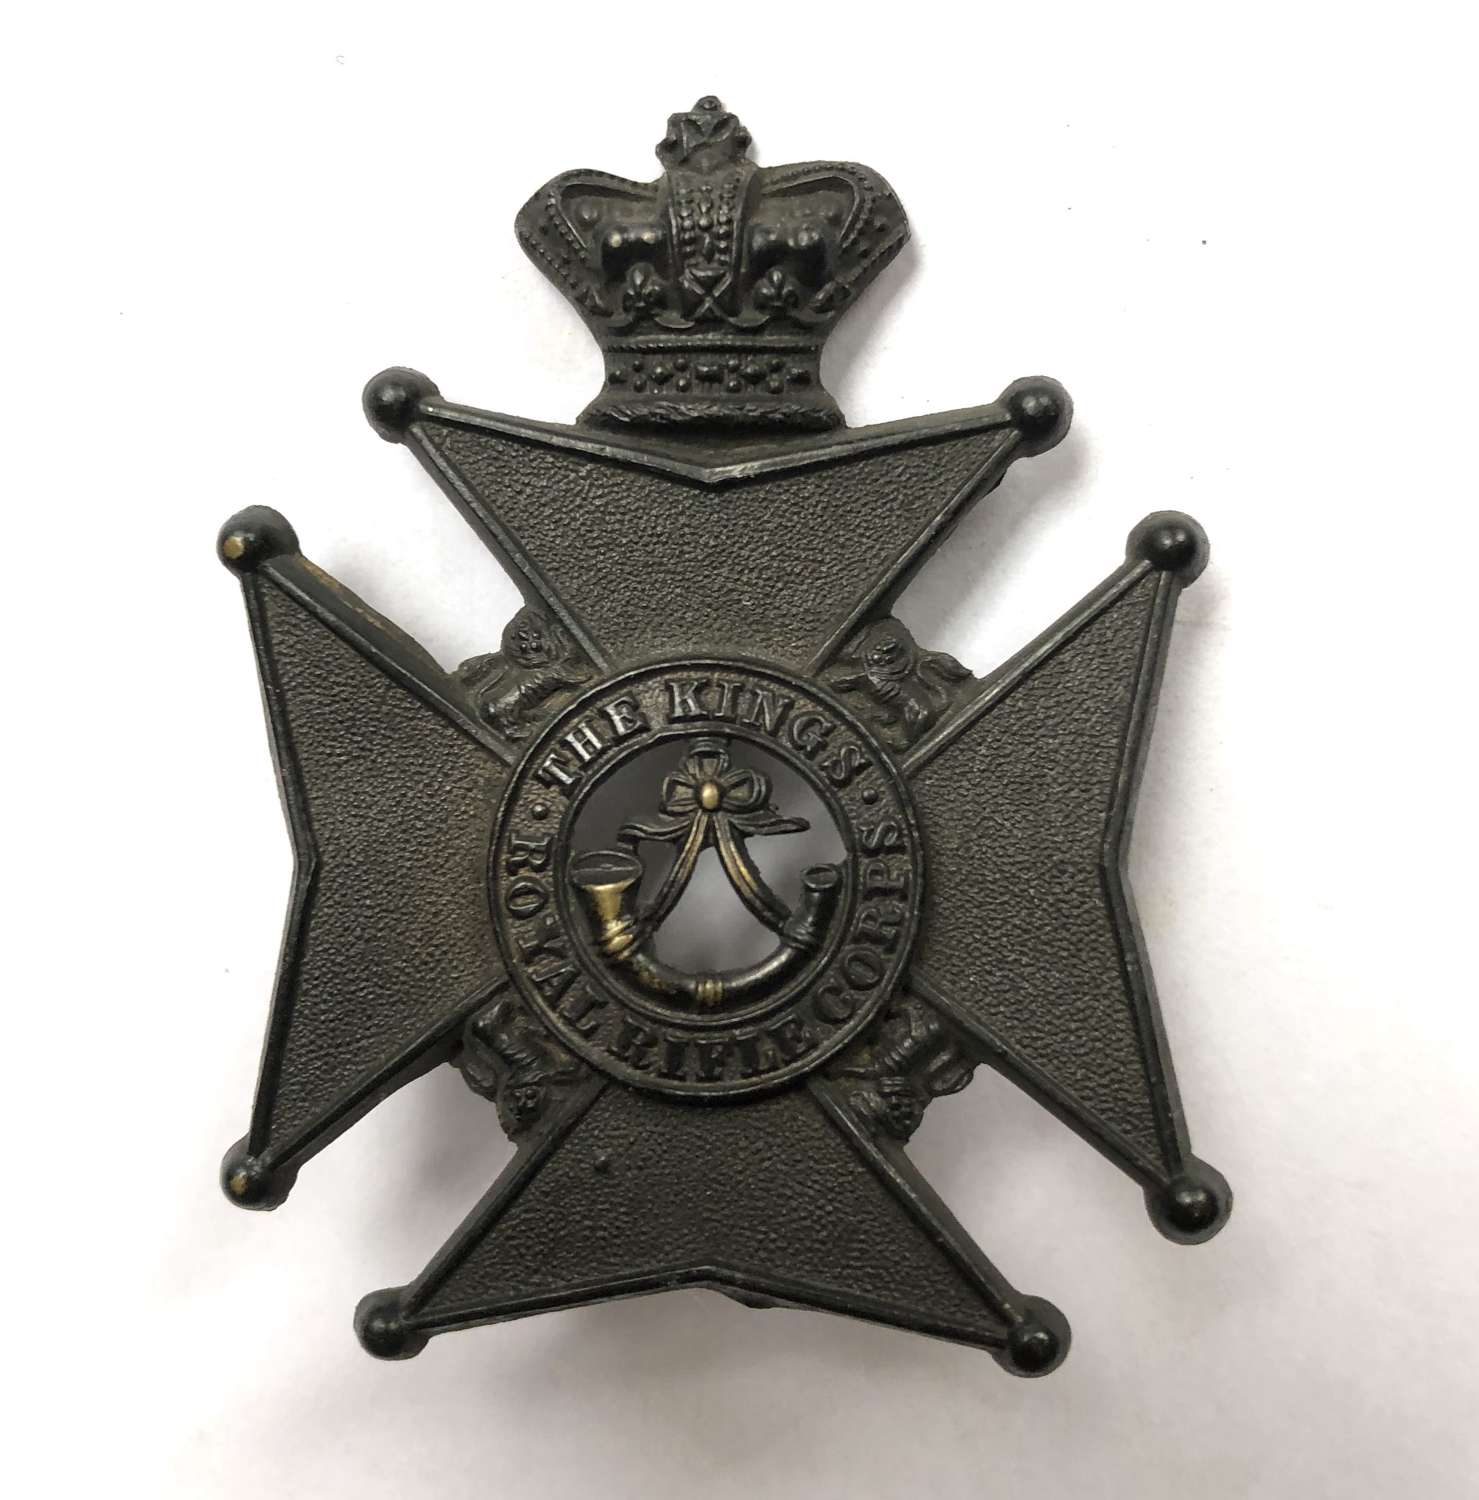 King’s Royal Rifle Corps Militia Battalions Victorian glengarry badge